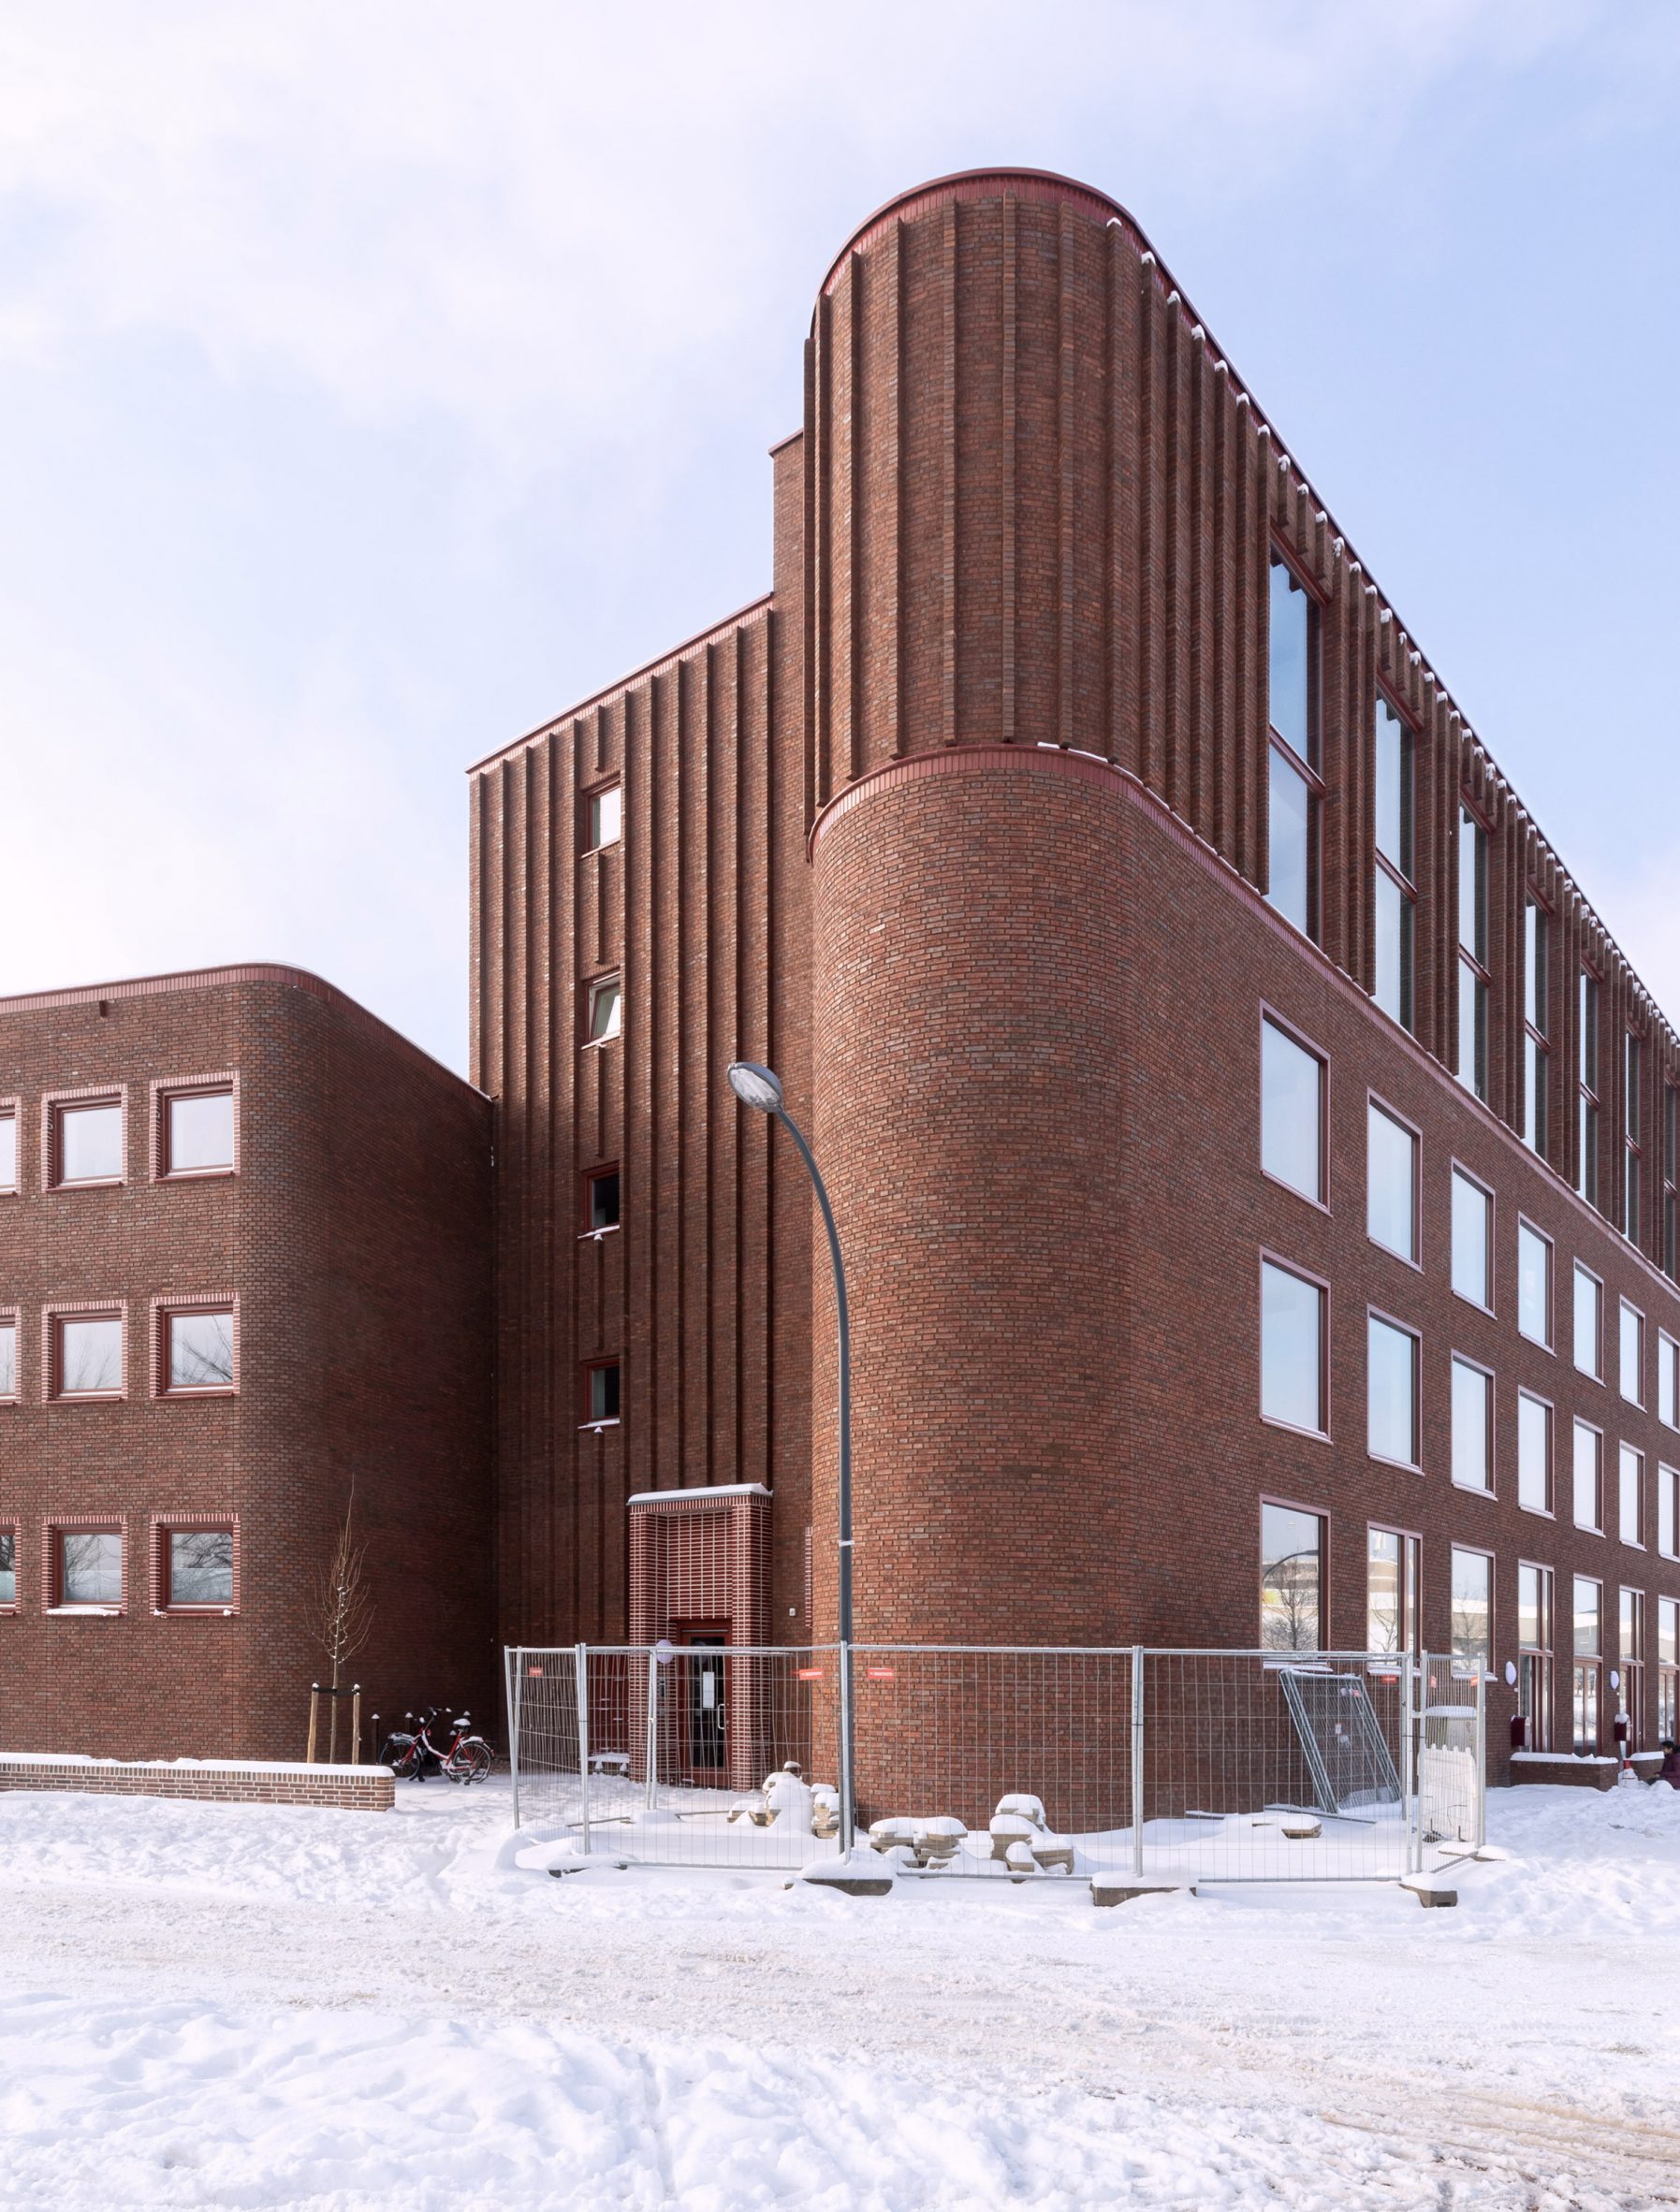 Exterior view of brick apartment block by Martens Willems & Humblé Architecten